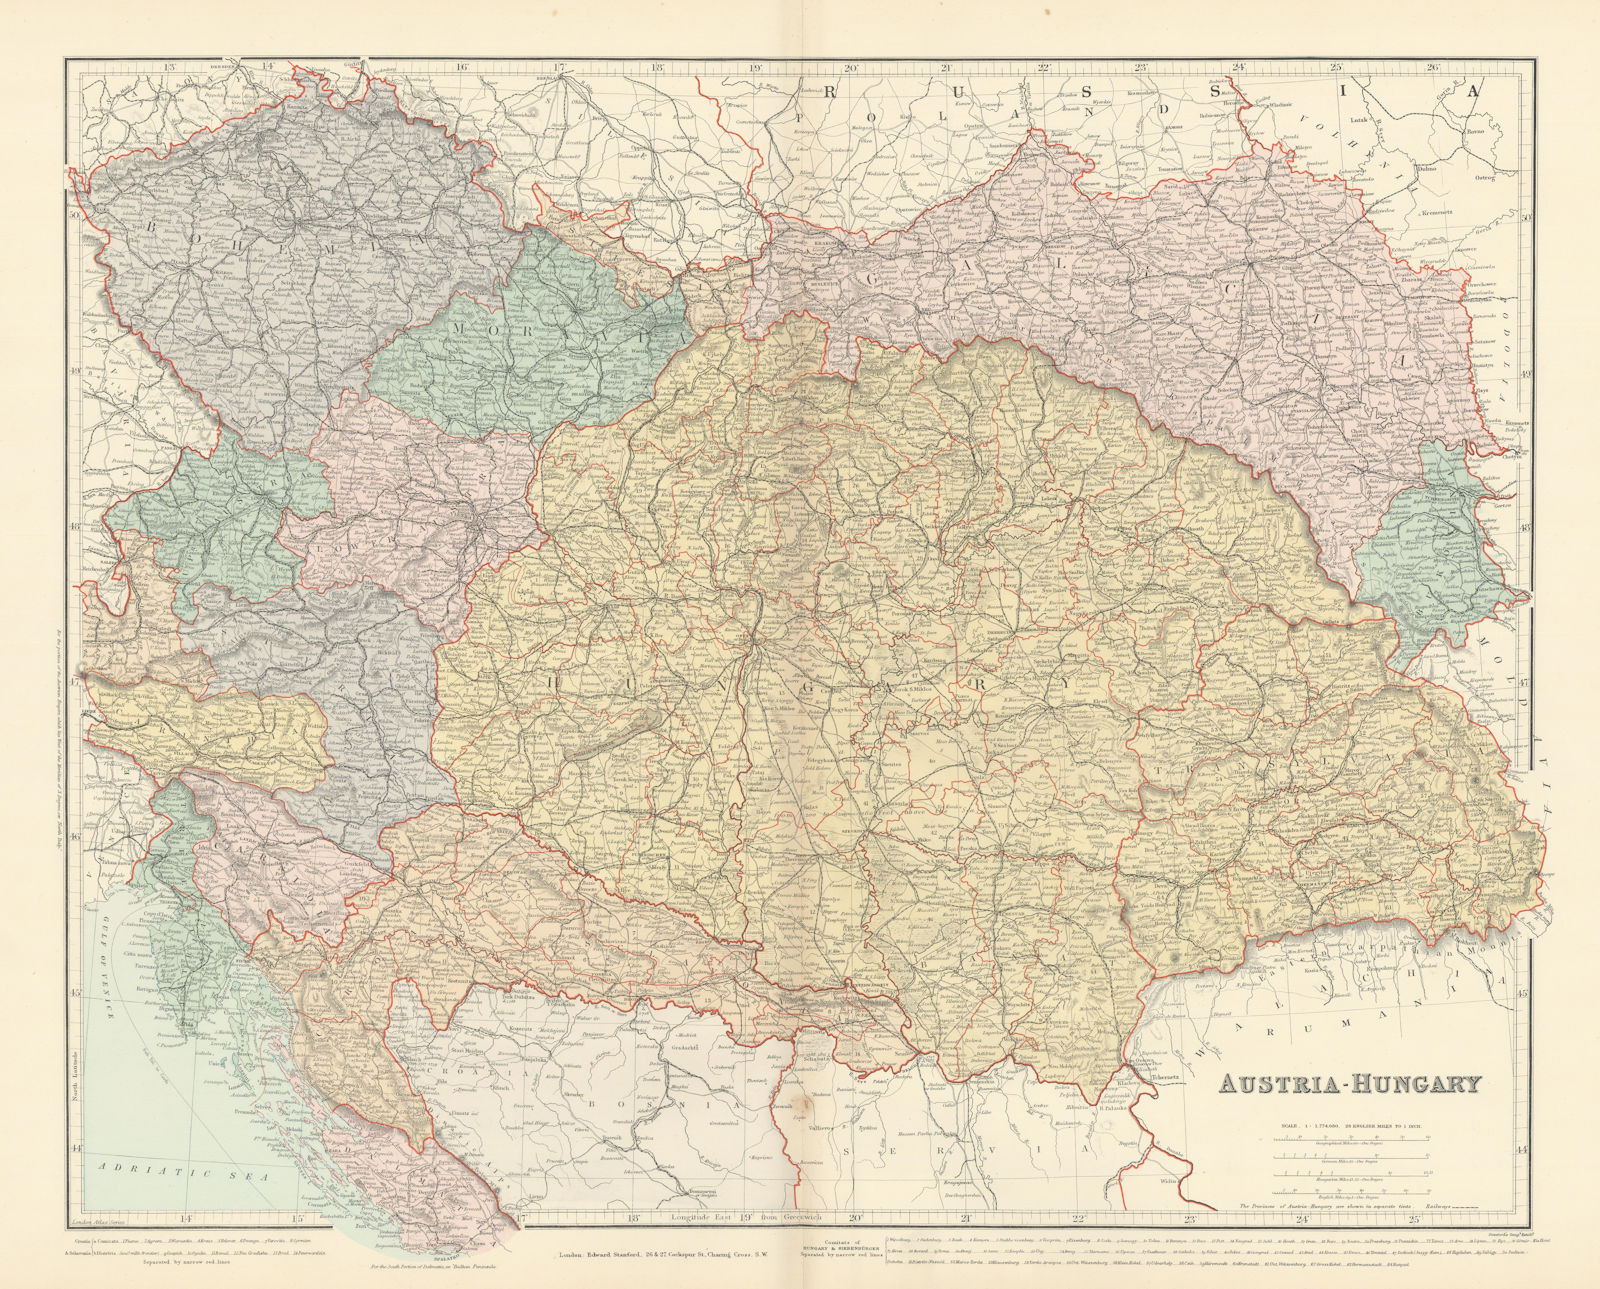 Austria-Hungary. Croatia Czechia Bohemia Galicia Transylvania. STANFORD 1896 map